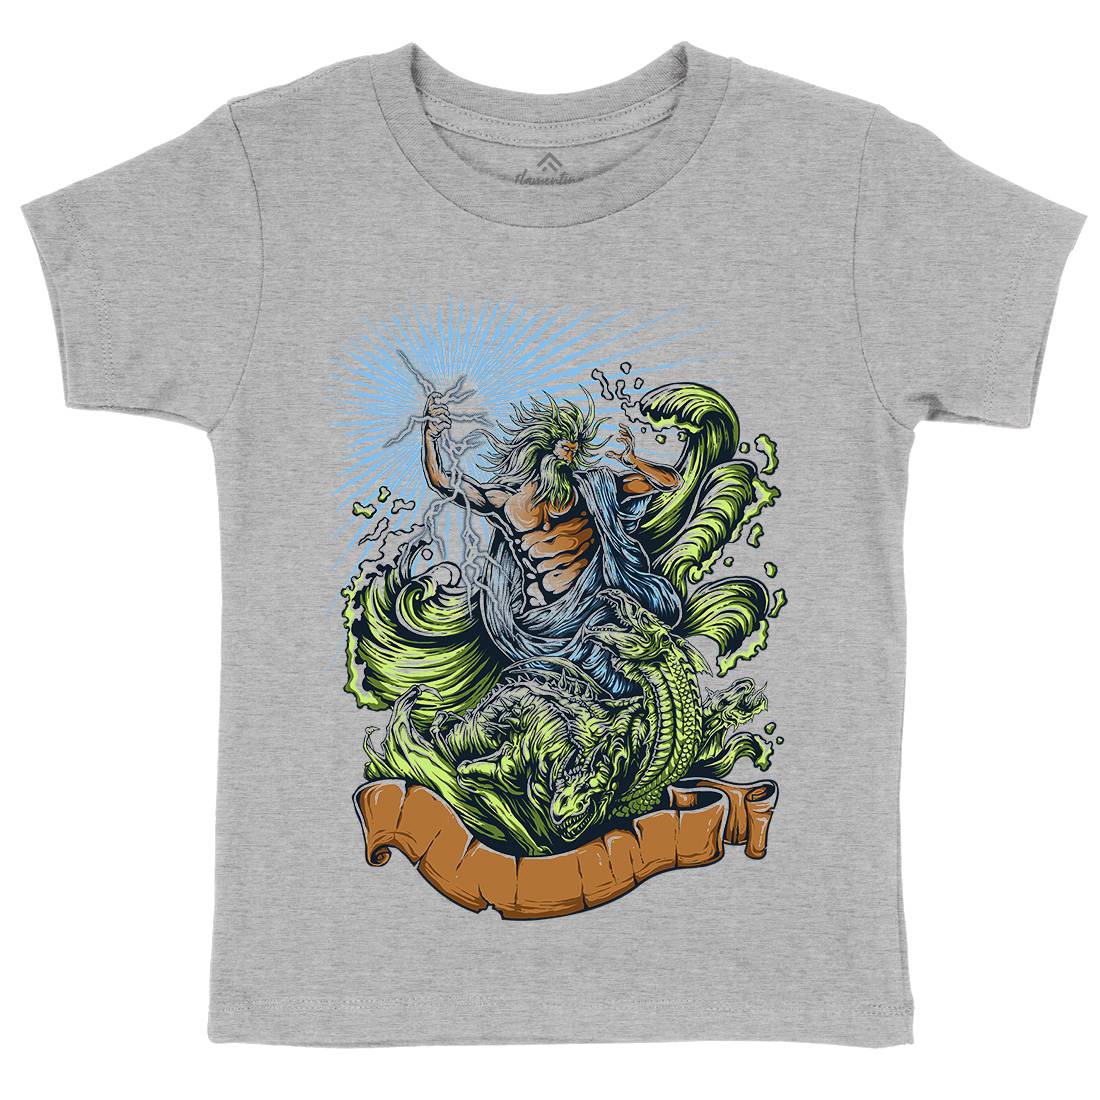 Poseidon Kids Crew Neck T-Shirt Navy D067